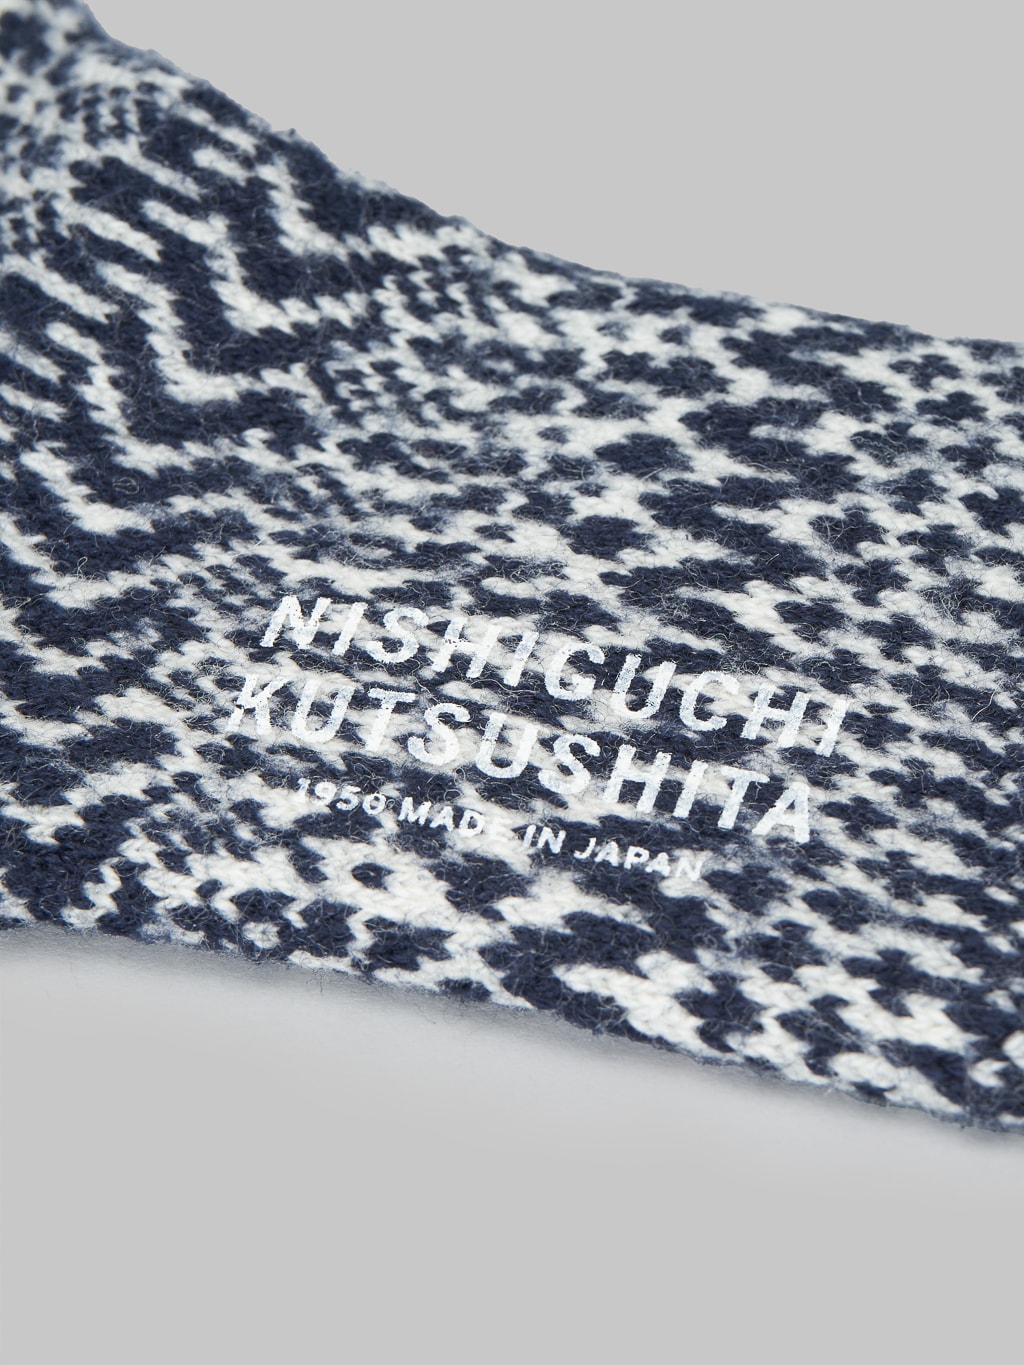 Nishiguchi Kutsushita Wool Jacquard Socks Berlin Blue brand logo stamped